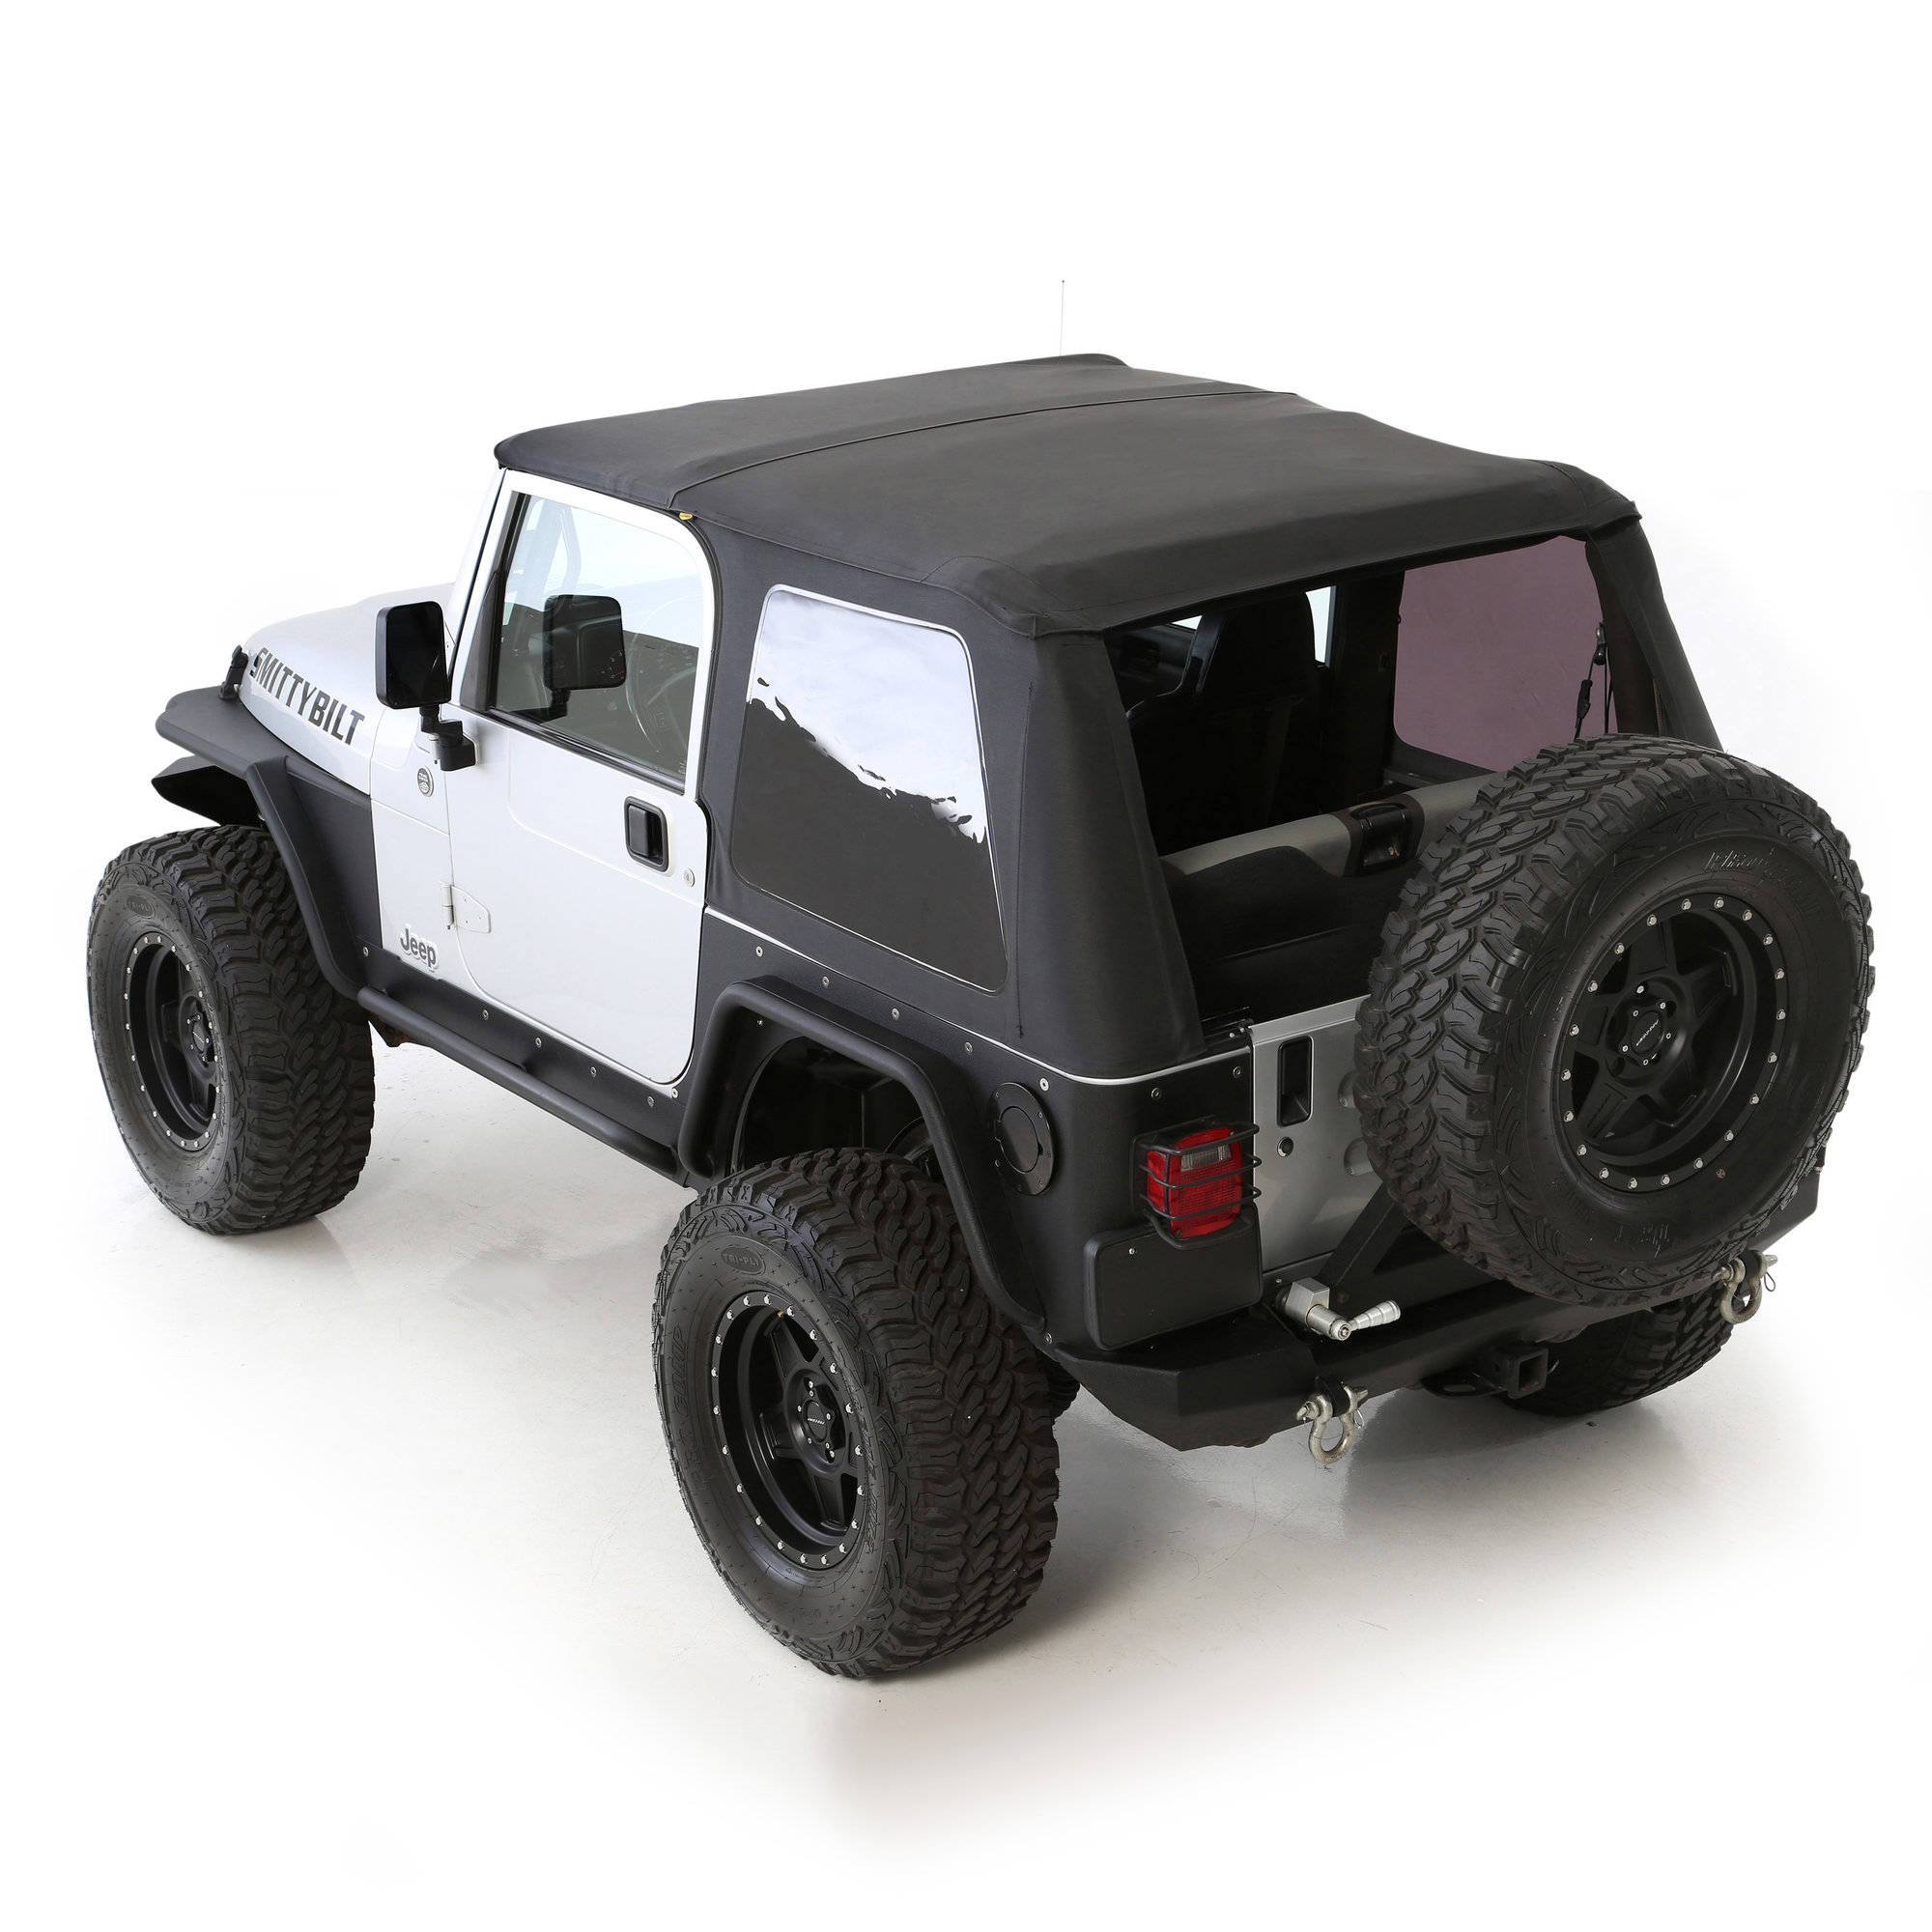 Smittybilt 9973235 Bowless Combo Soft Top for 97-06 Jeep Wrangler TJ |  Quadratec